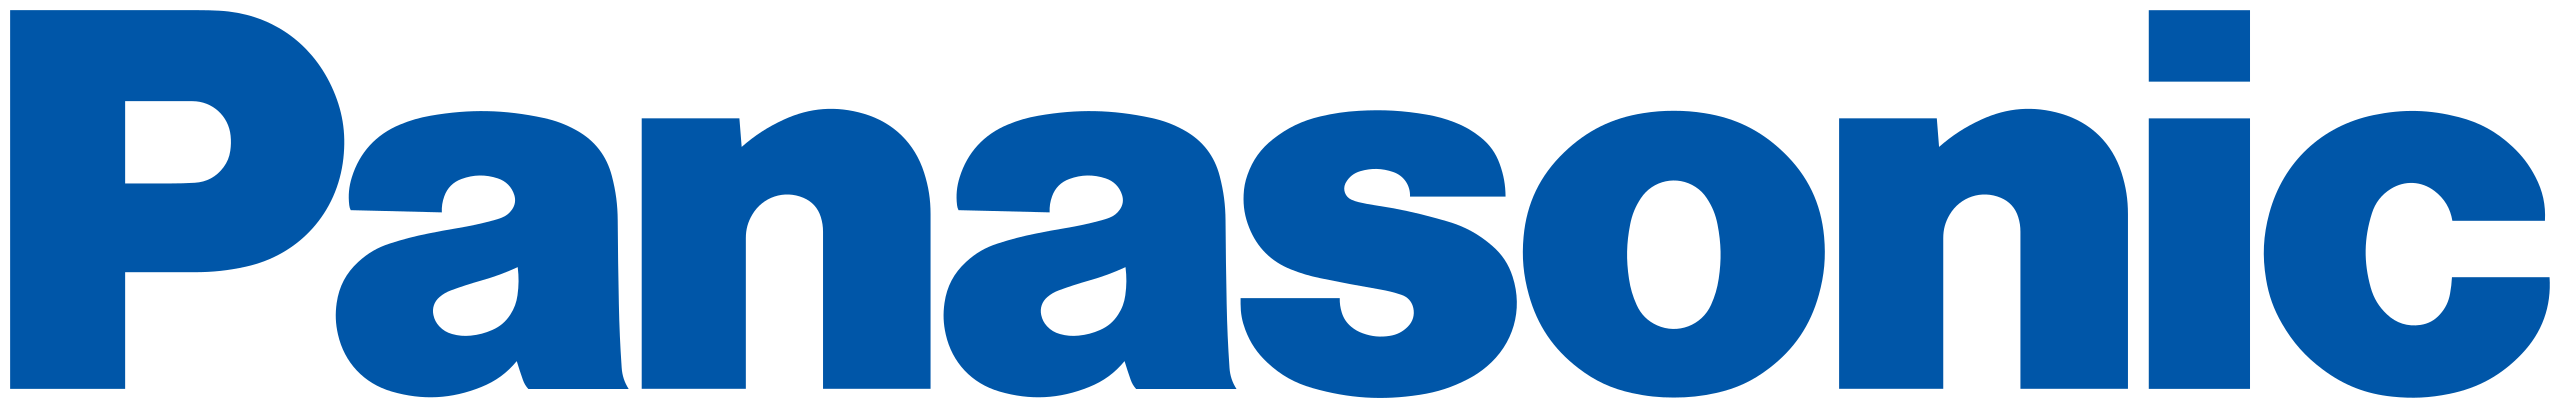 Panasonic Corp logo